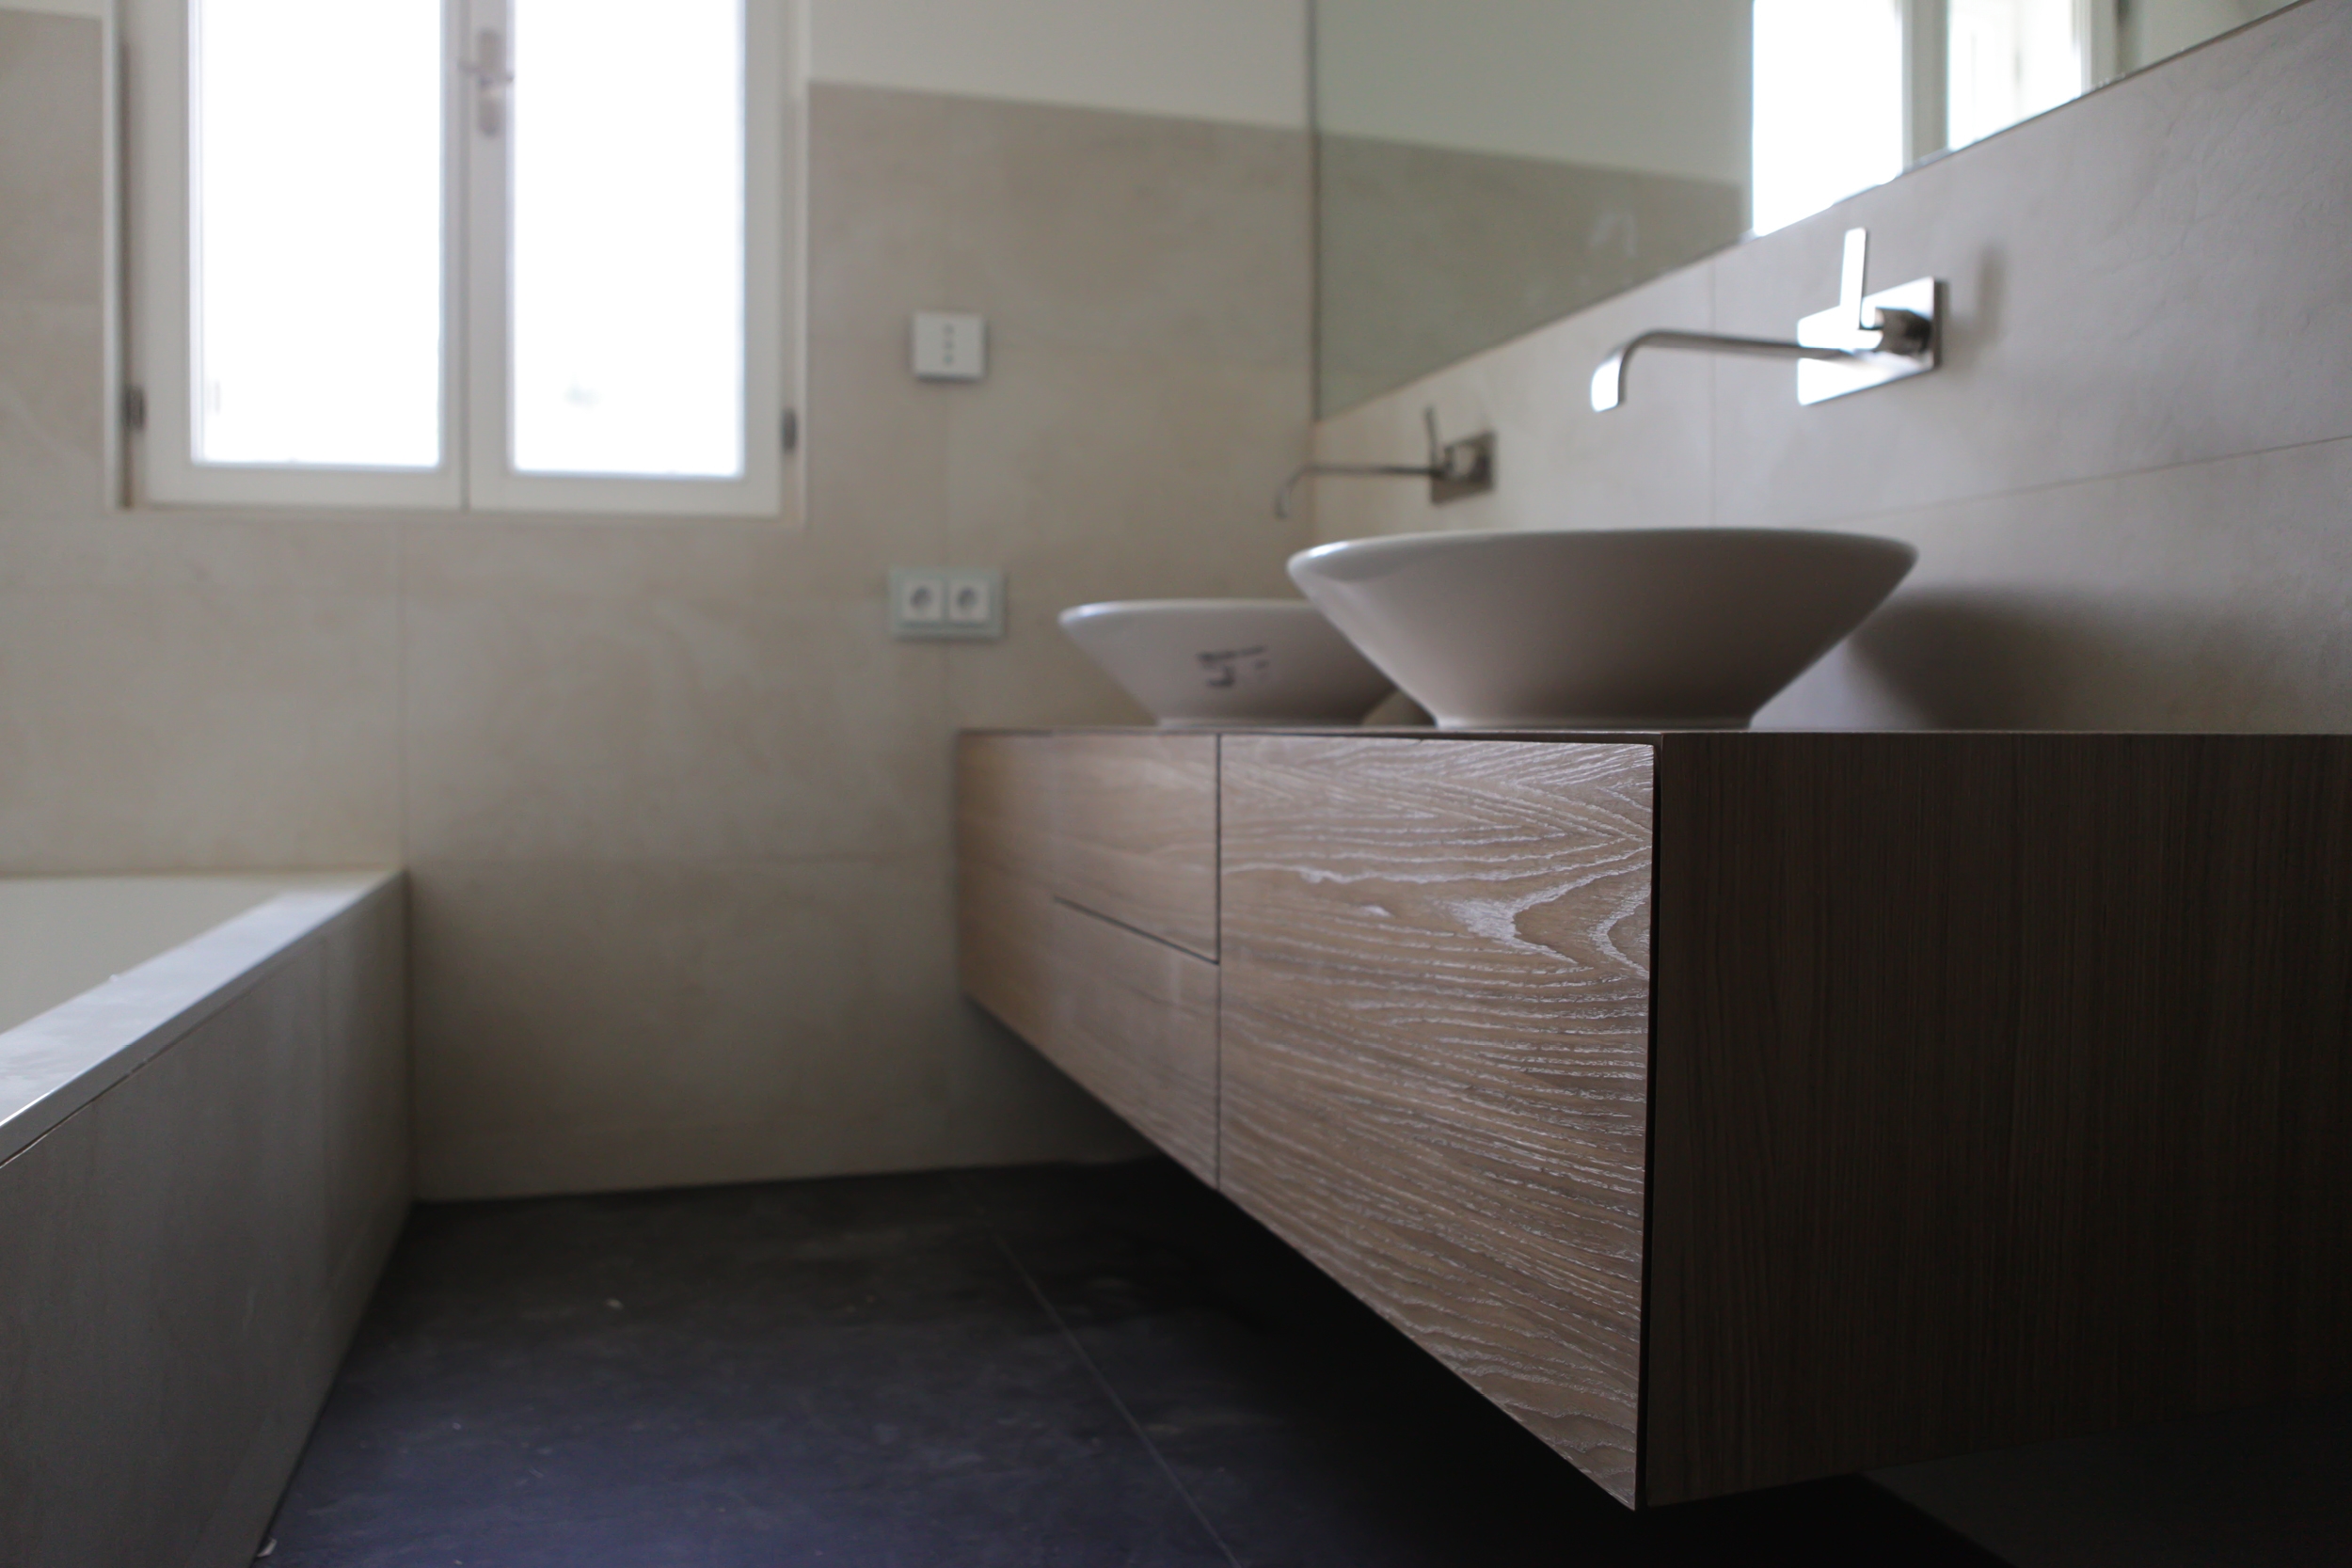 Badezimmer, Toiletten, Sanitärbereich aus Holz 007 © Wohnkultur Strantz / Manfred Strantz